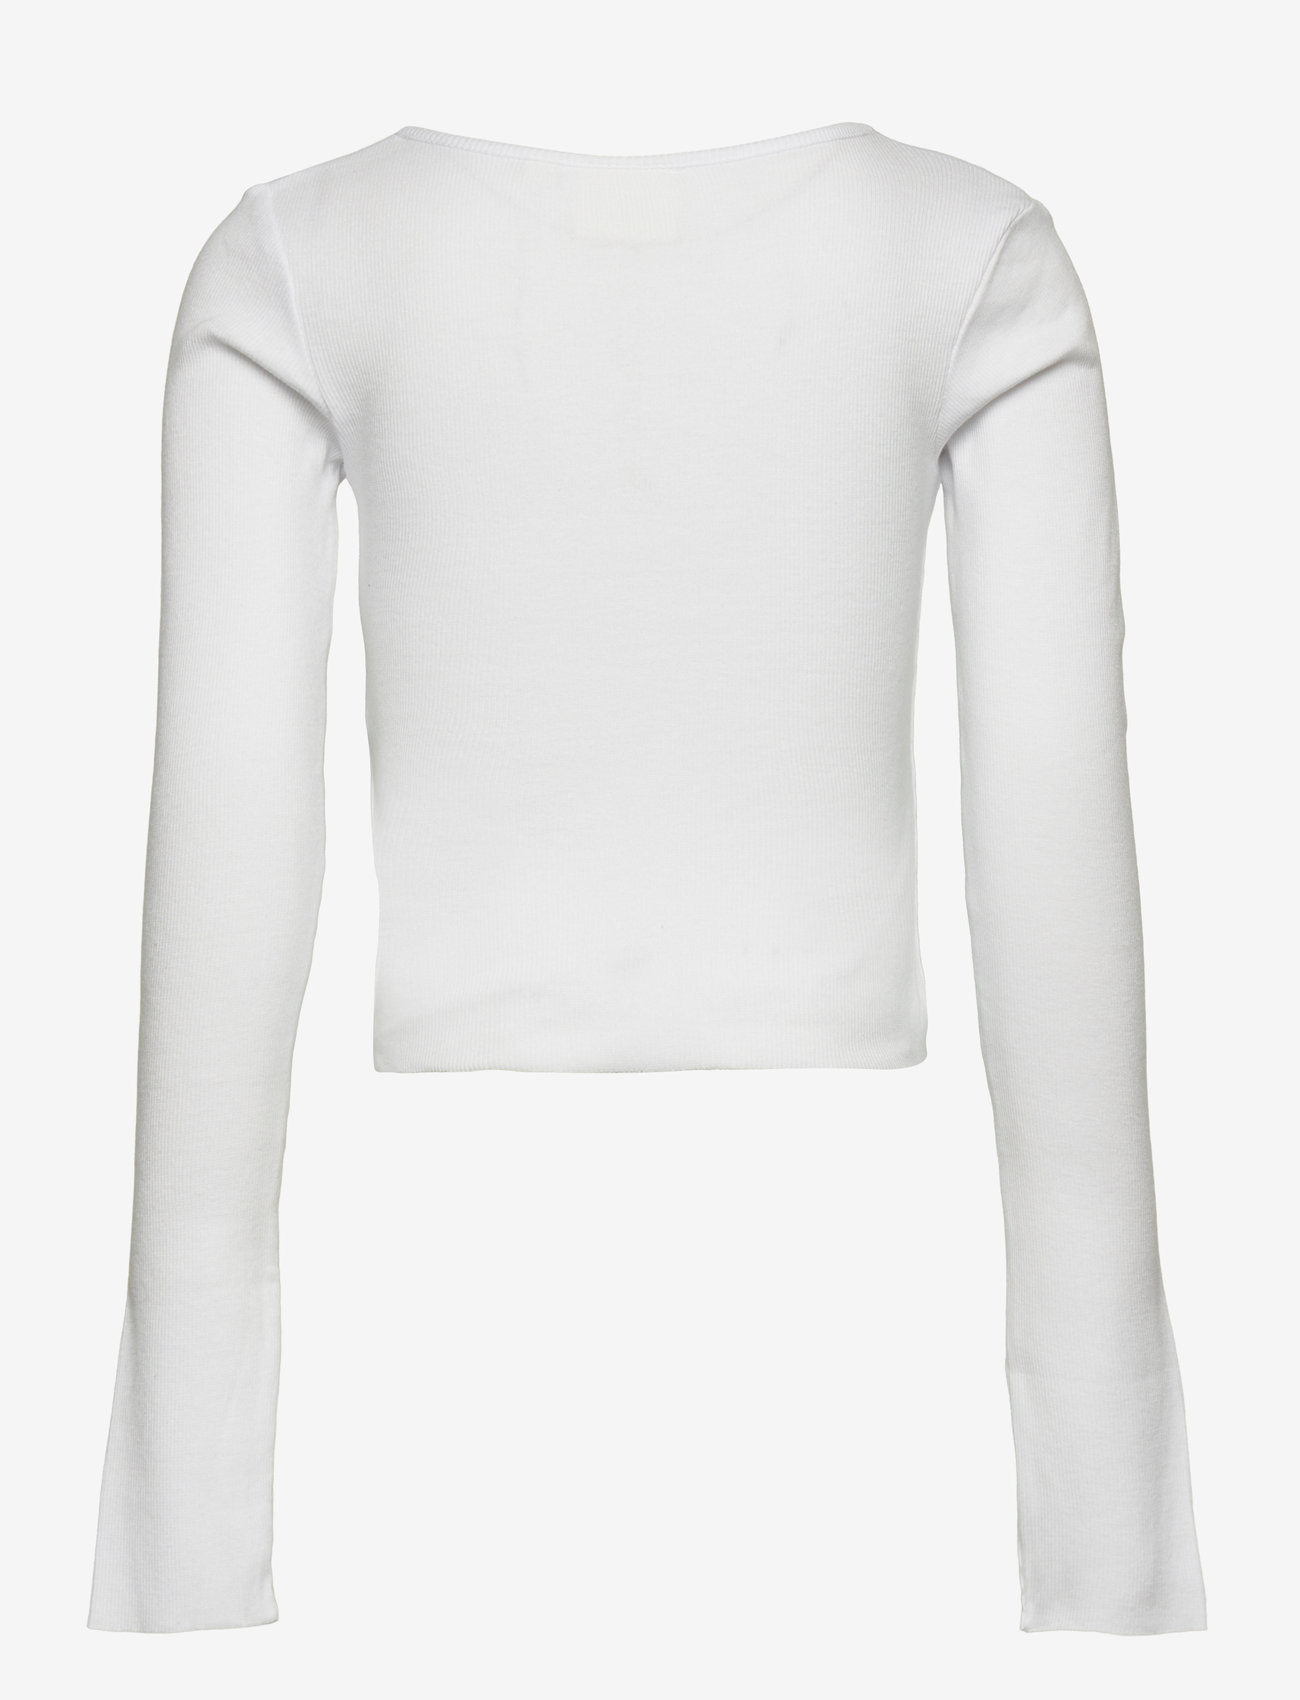 Sofie Schnoor Young - T-shirt long-sleeve - marškinėliai ilgomis rankovėmis - brilliant white - 1